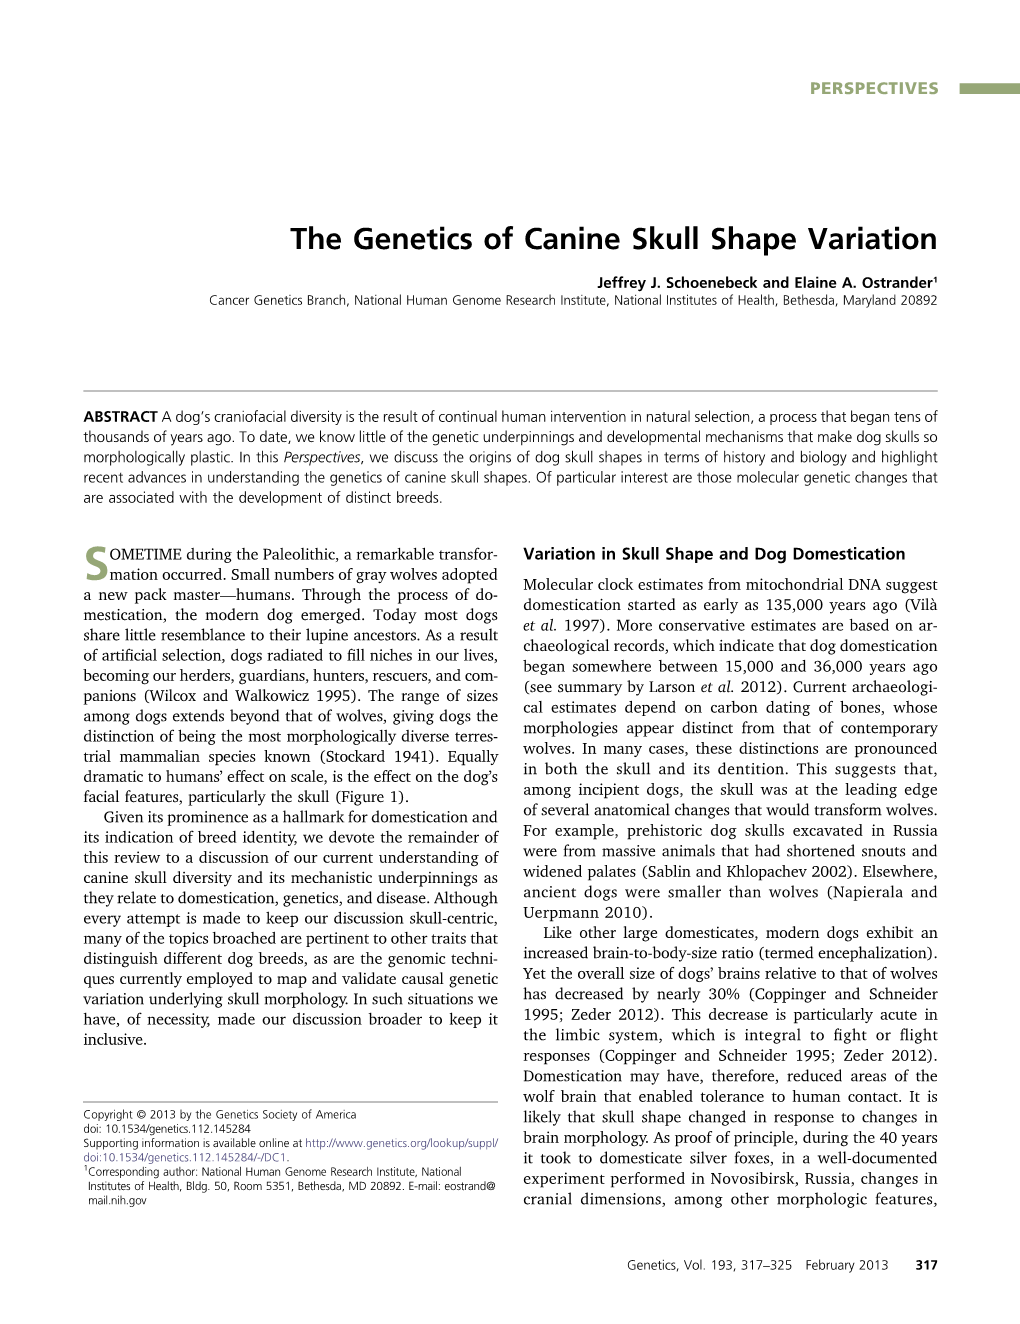 The Genetics of Canine Skull Shape Variation